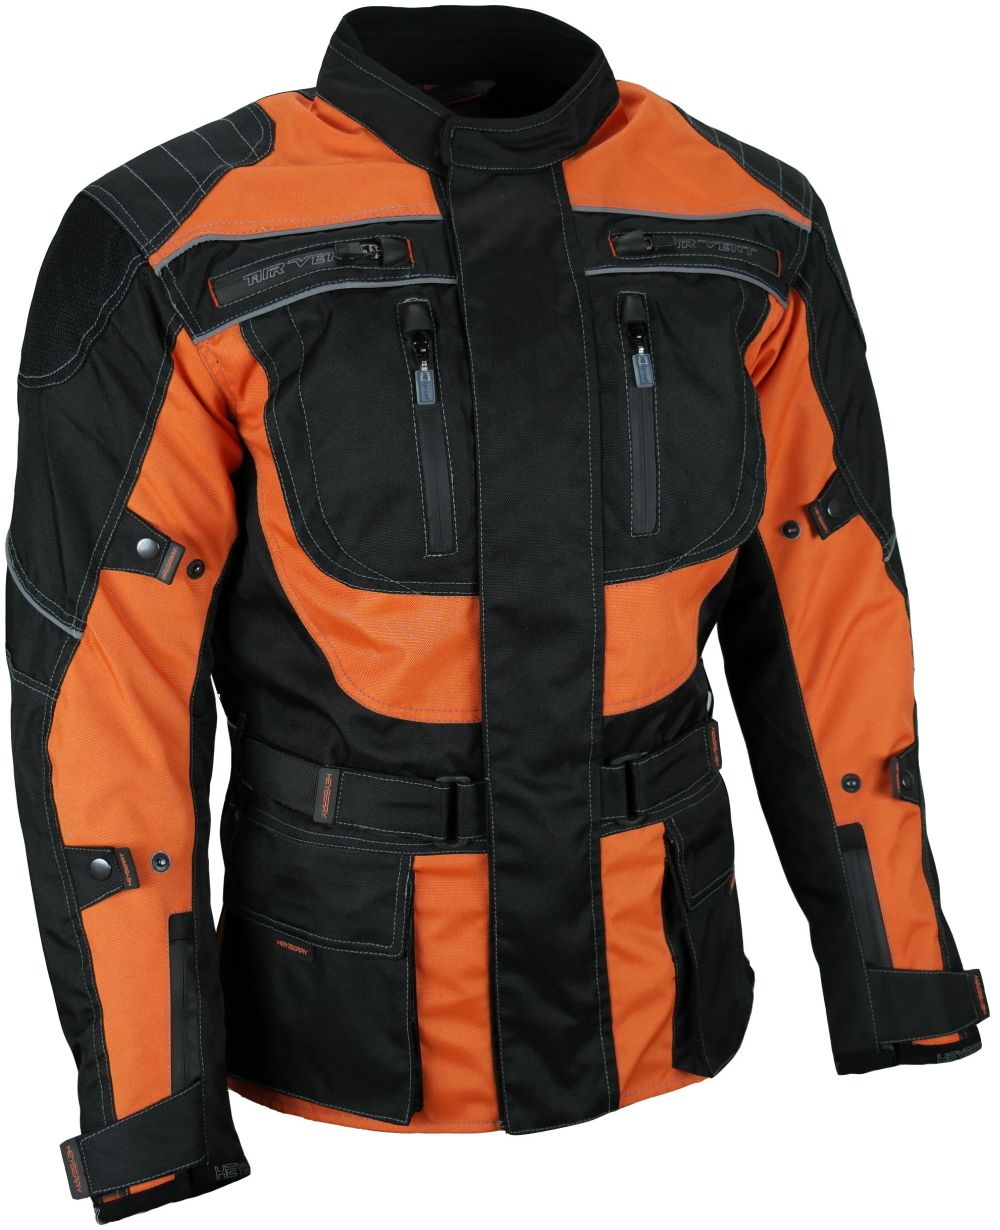 L Heyberry Textil Motorrad Jacke Motorradjacke Schwarz Orange Gr